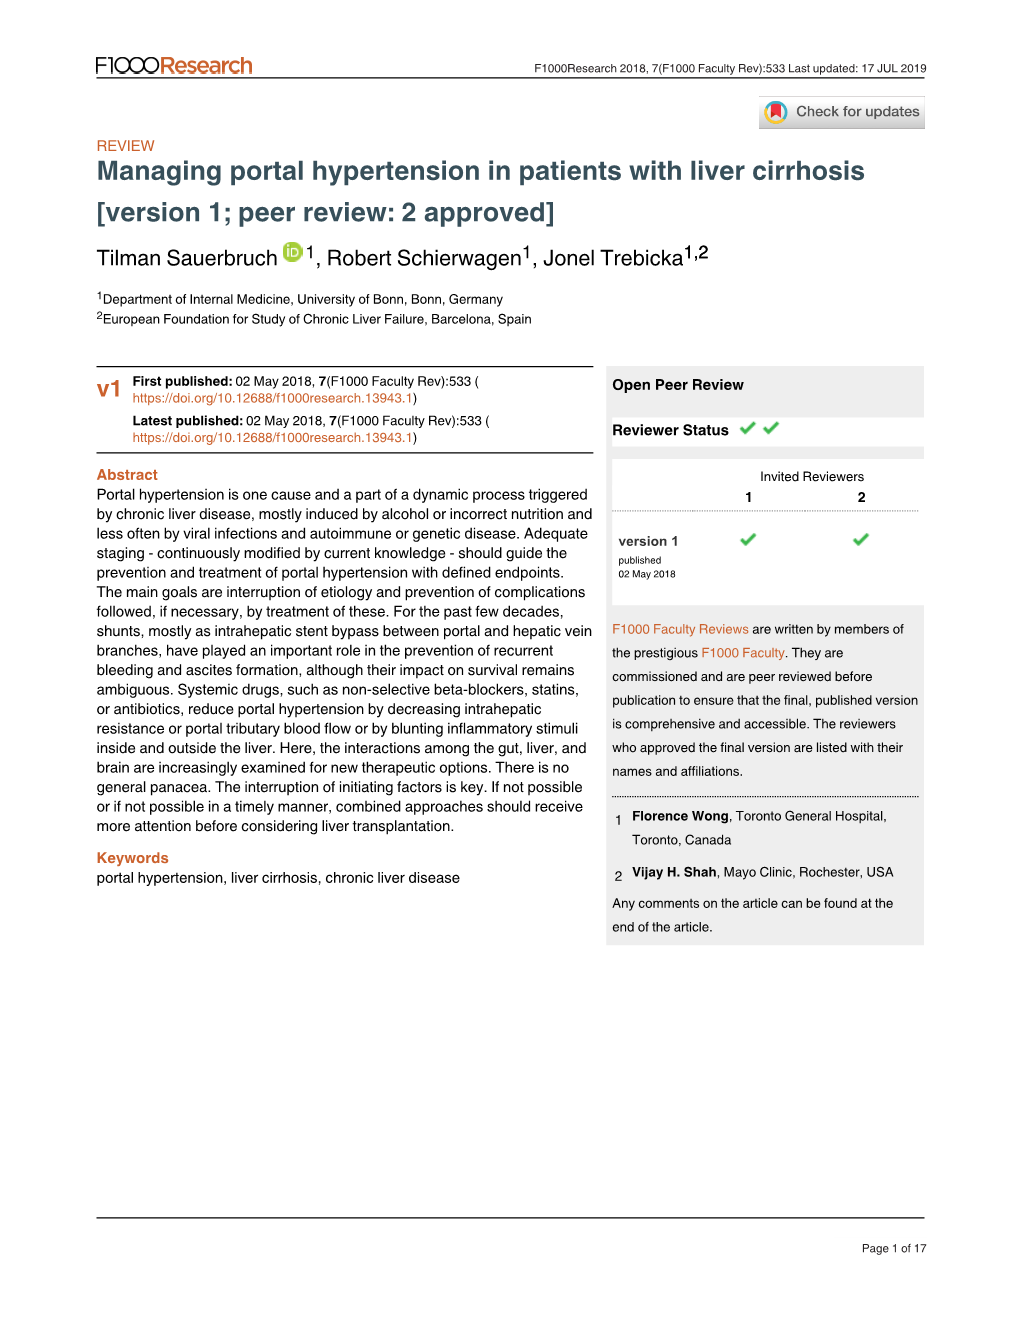 Managing Portal Hypertension in Patients with Liver Cirrhosis [Version 1; Peer Review: 2 Approved] Tilman Sauerbruch 1, Robert Schierwagen1, Jonel Trebicka1,2